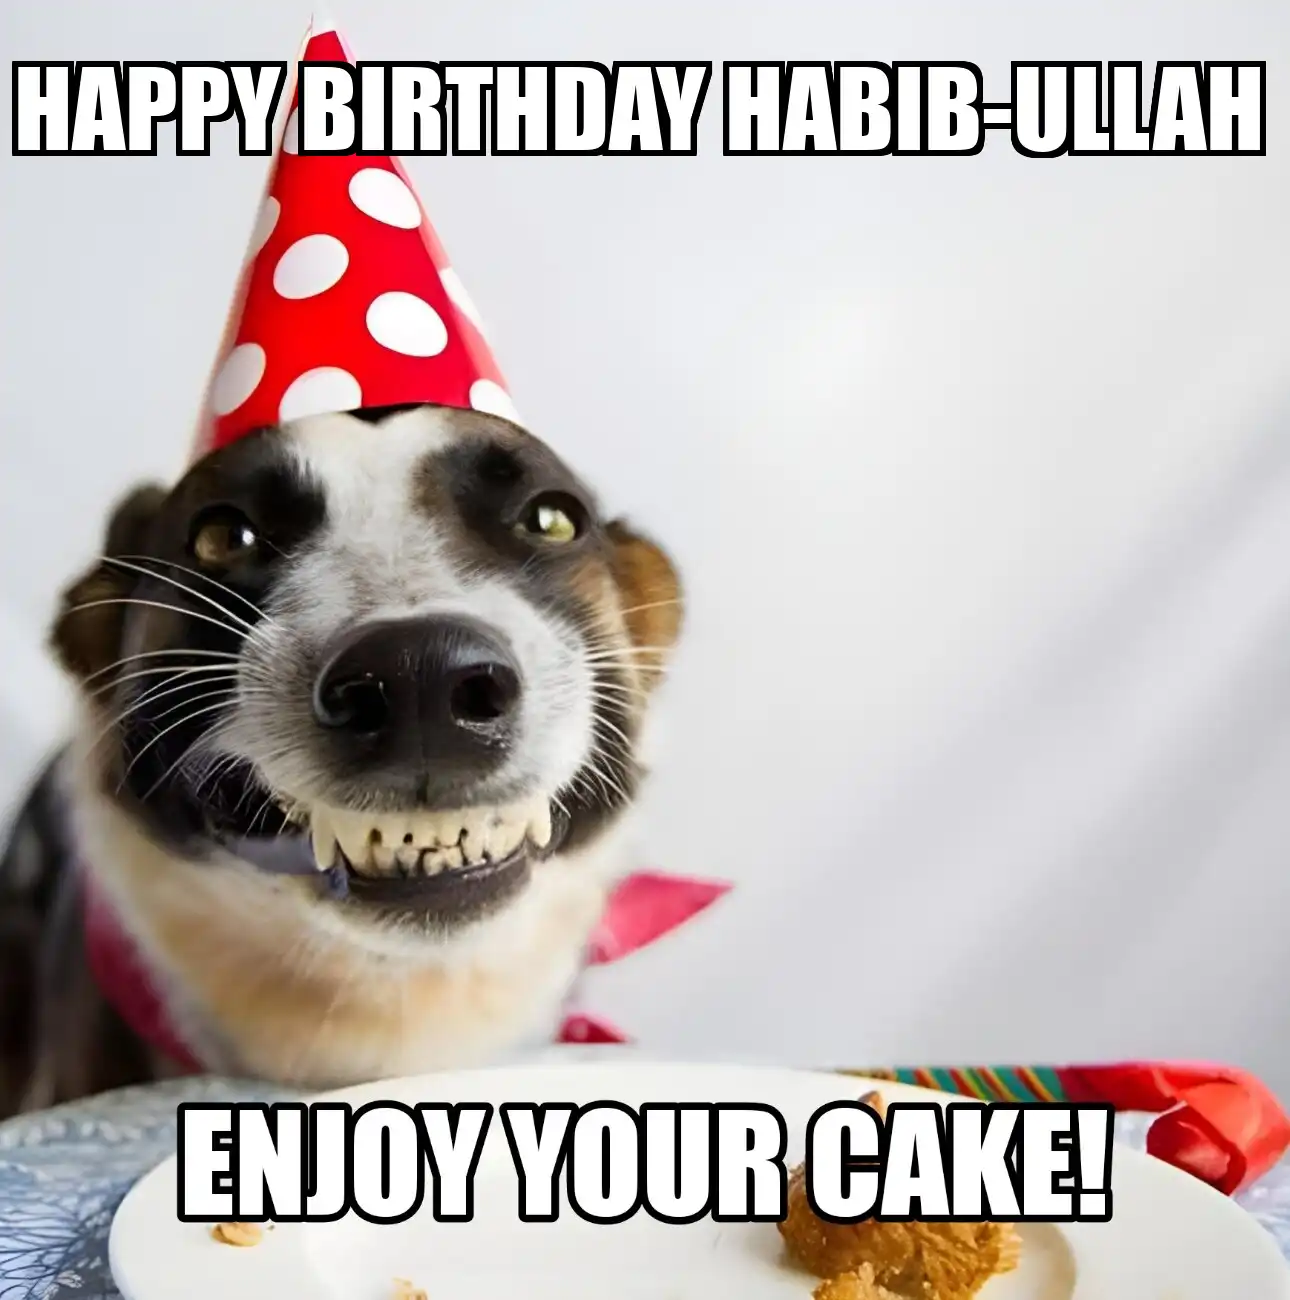 Happy Birthday Habib-ullah Enjoy Your Cake Dog Meme